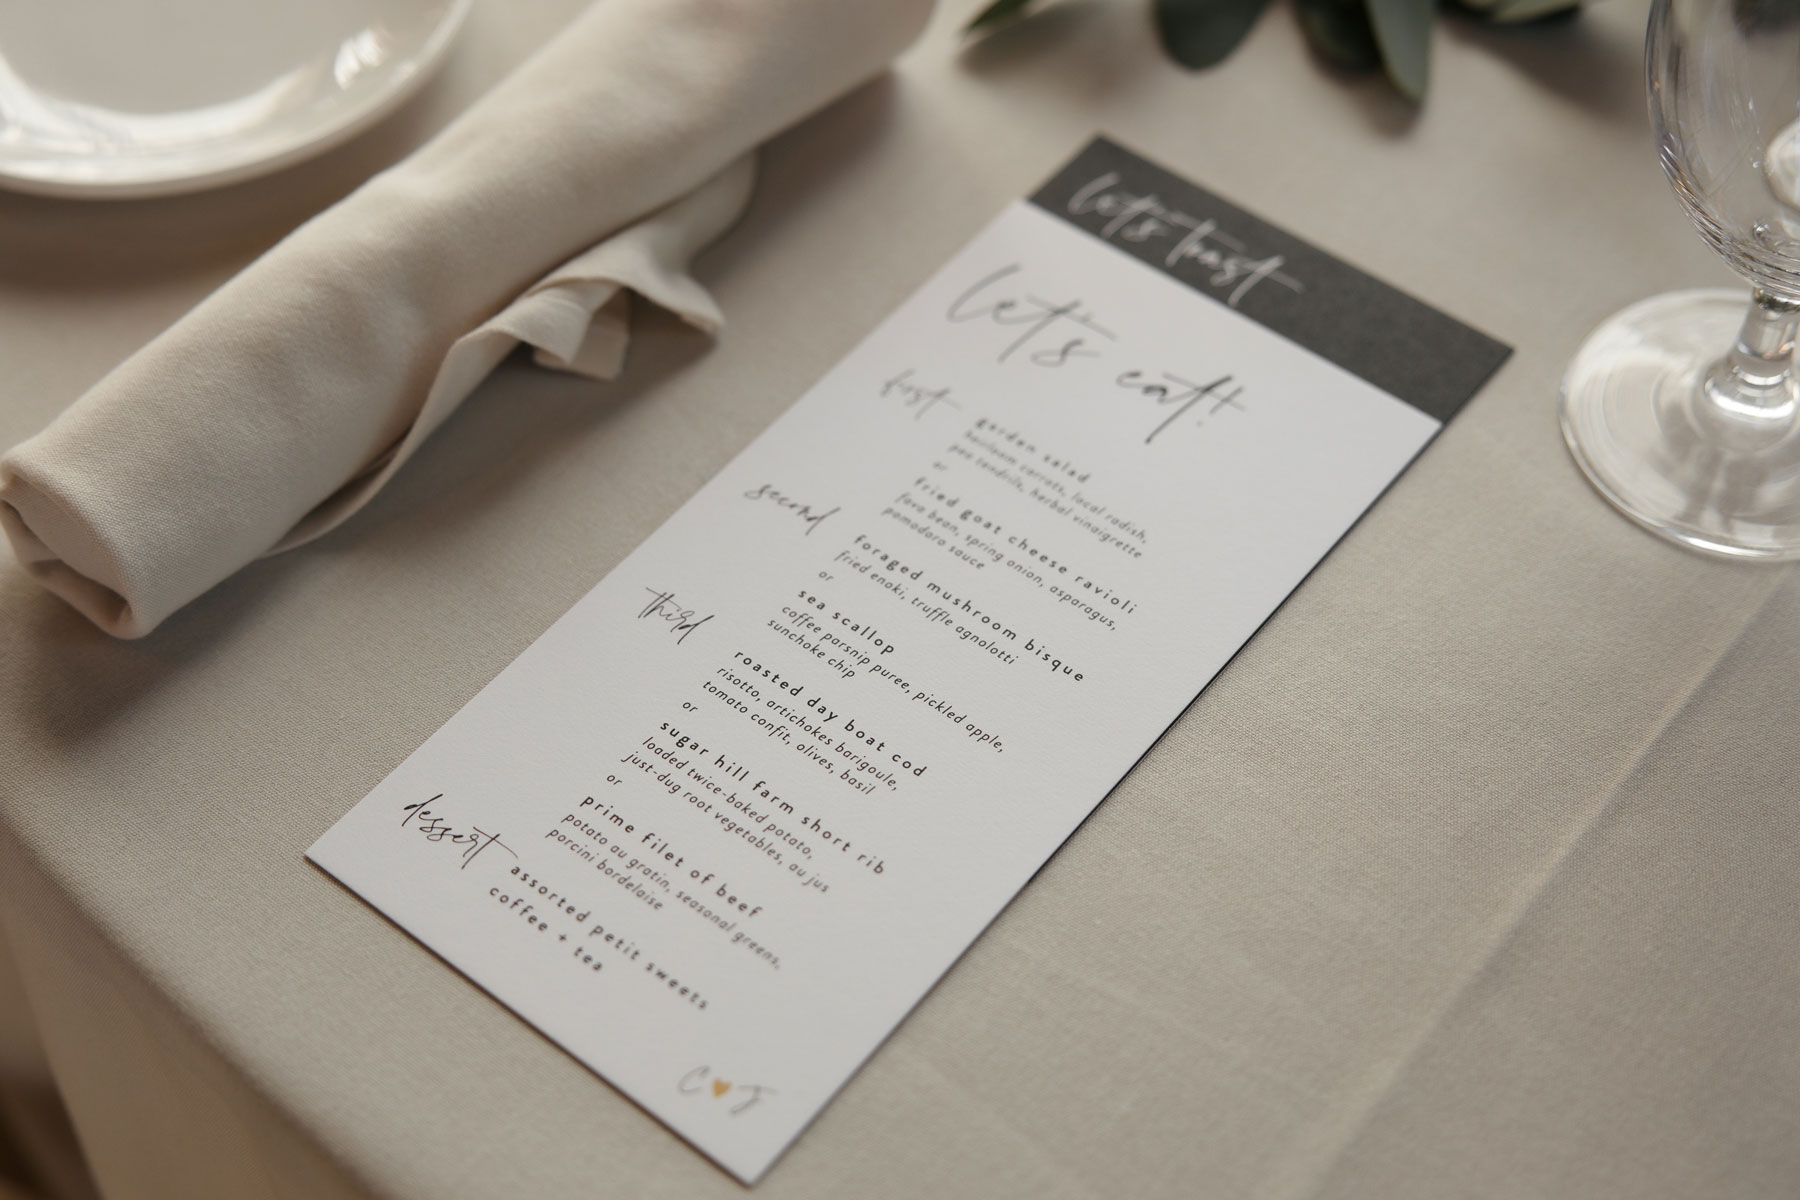 Modern wedding dinner and cocktail menus